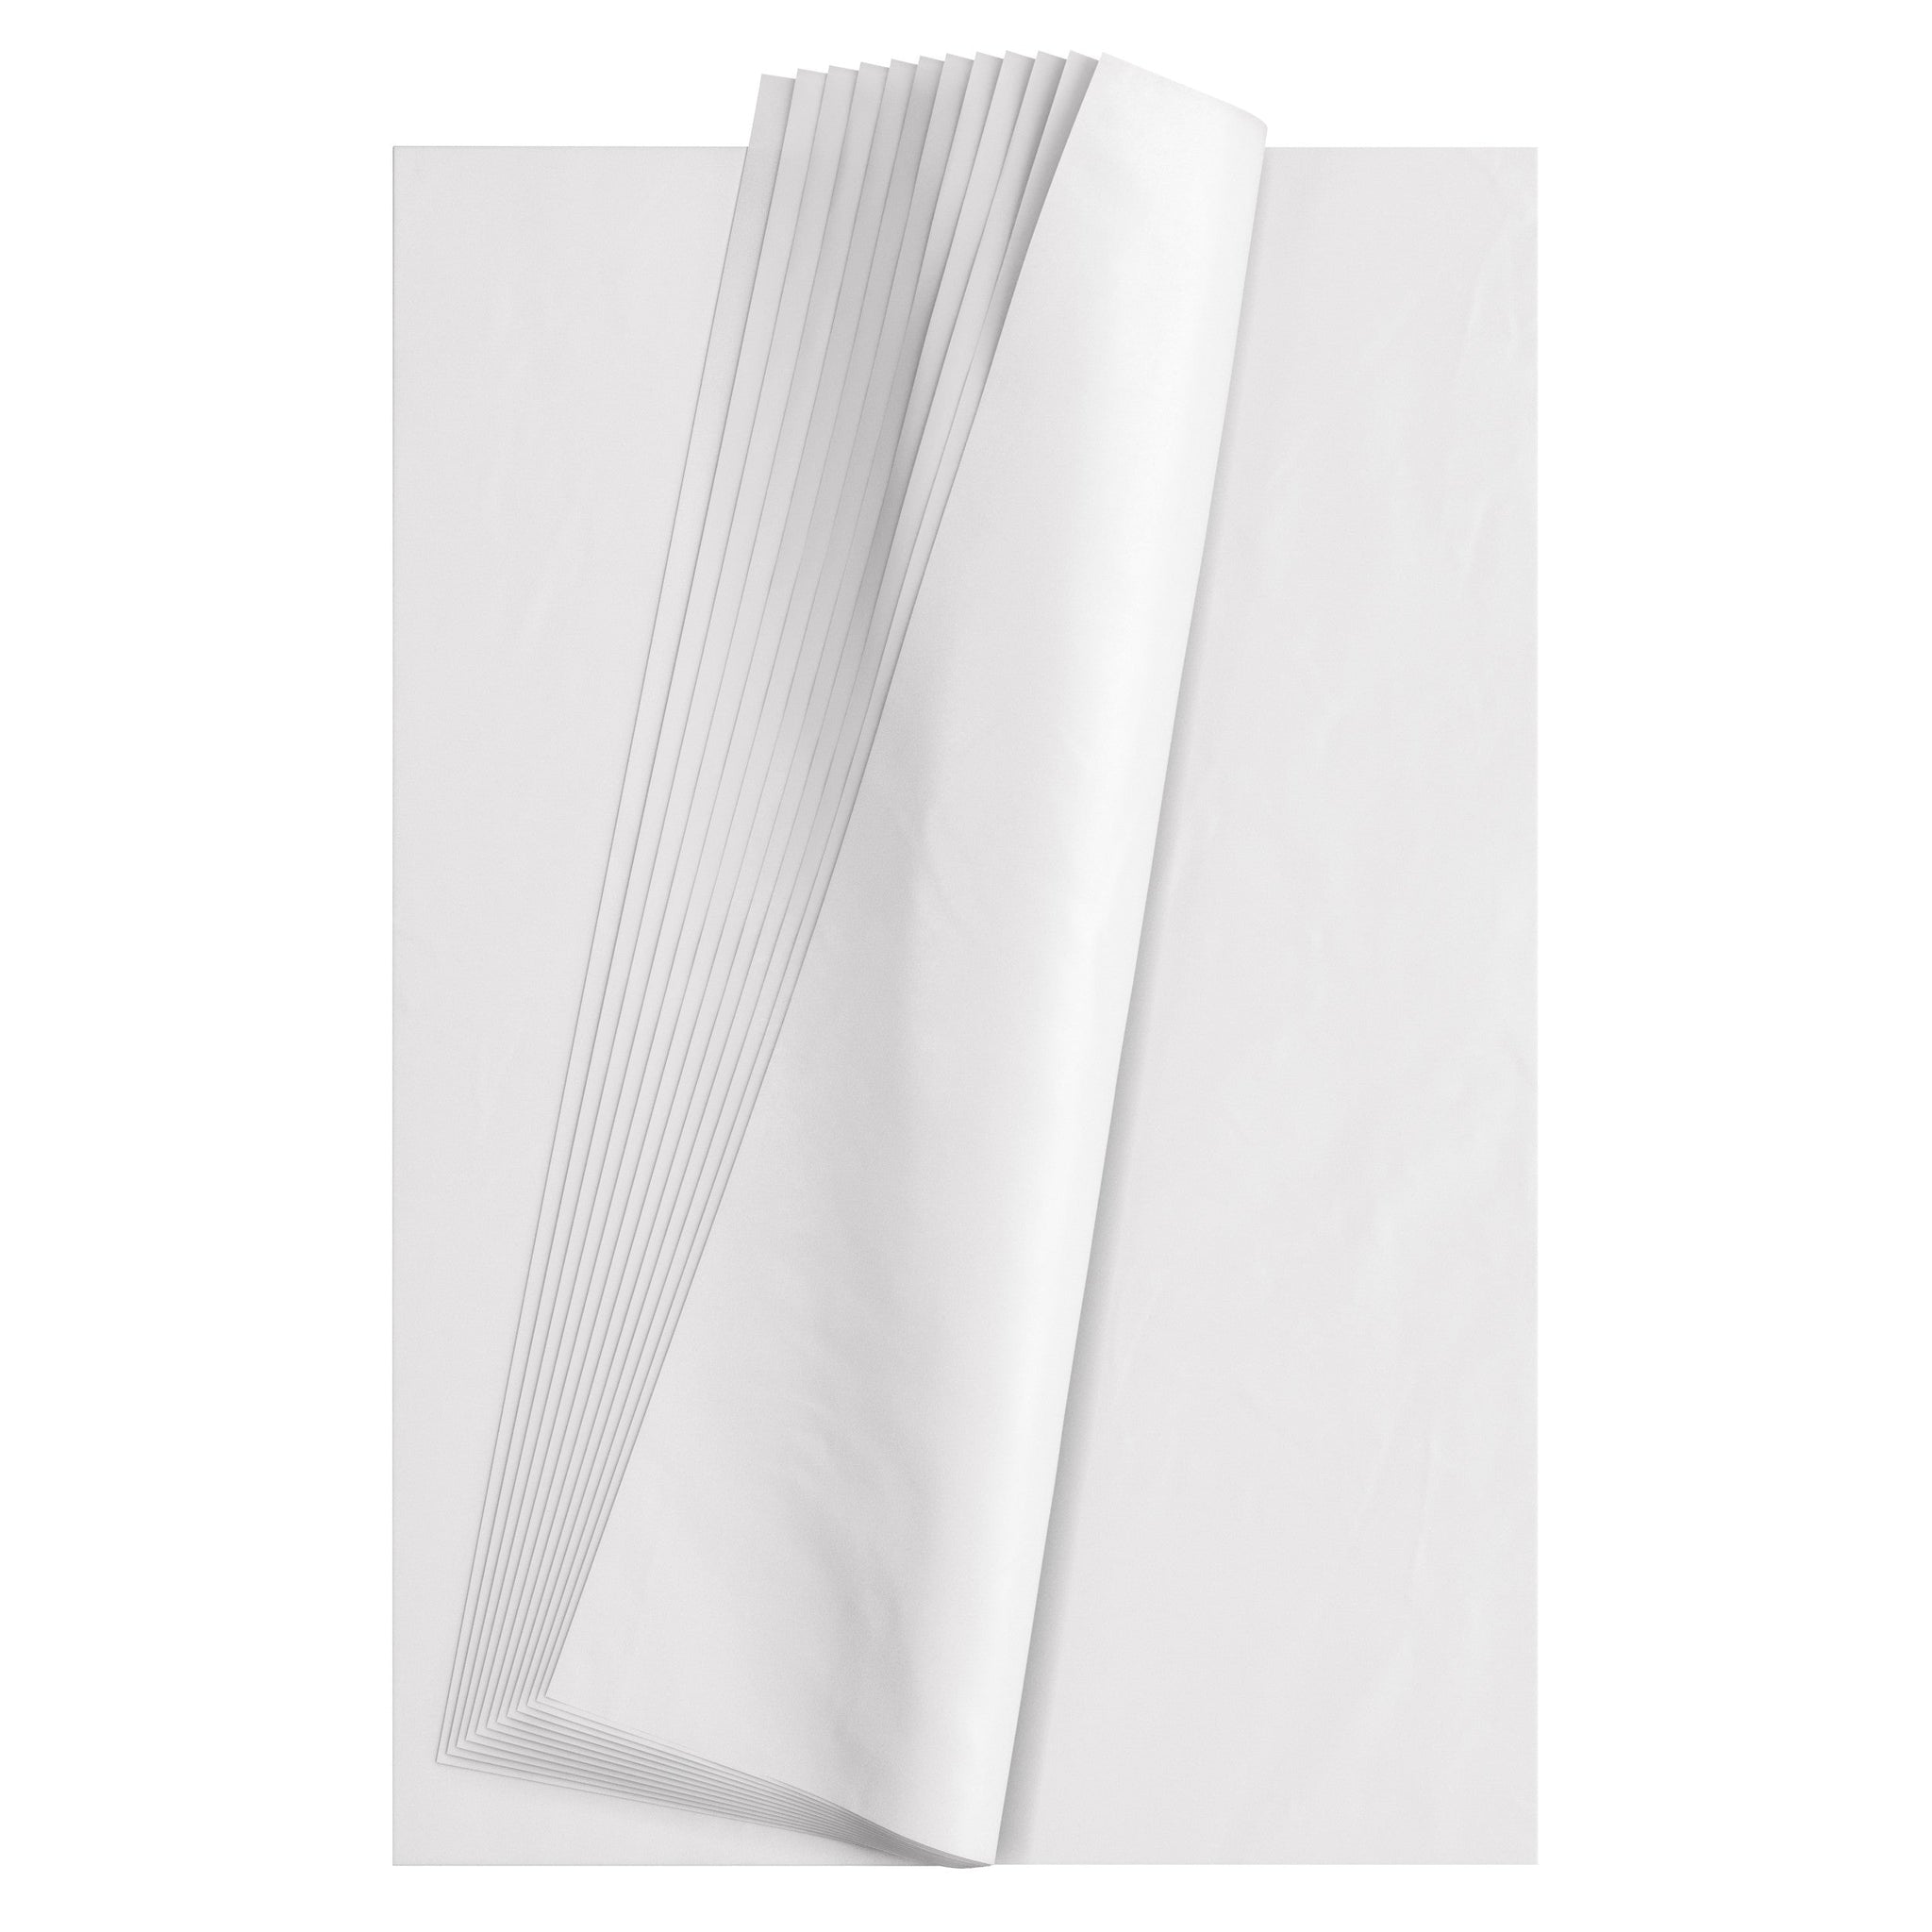 Premium White Gift Tissue Paper 20 X 20 100 Sheet 2 Pack (200 Sheets Total)  : Health & Household 